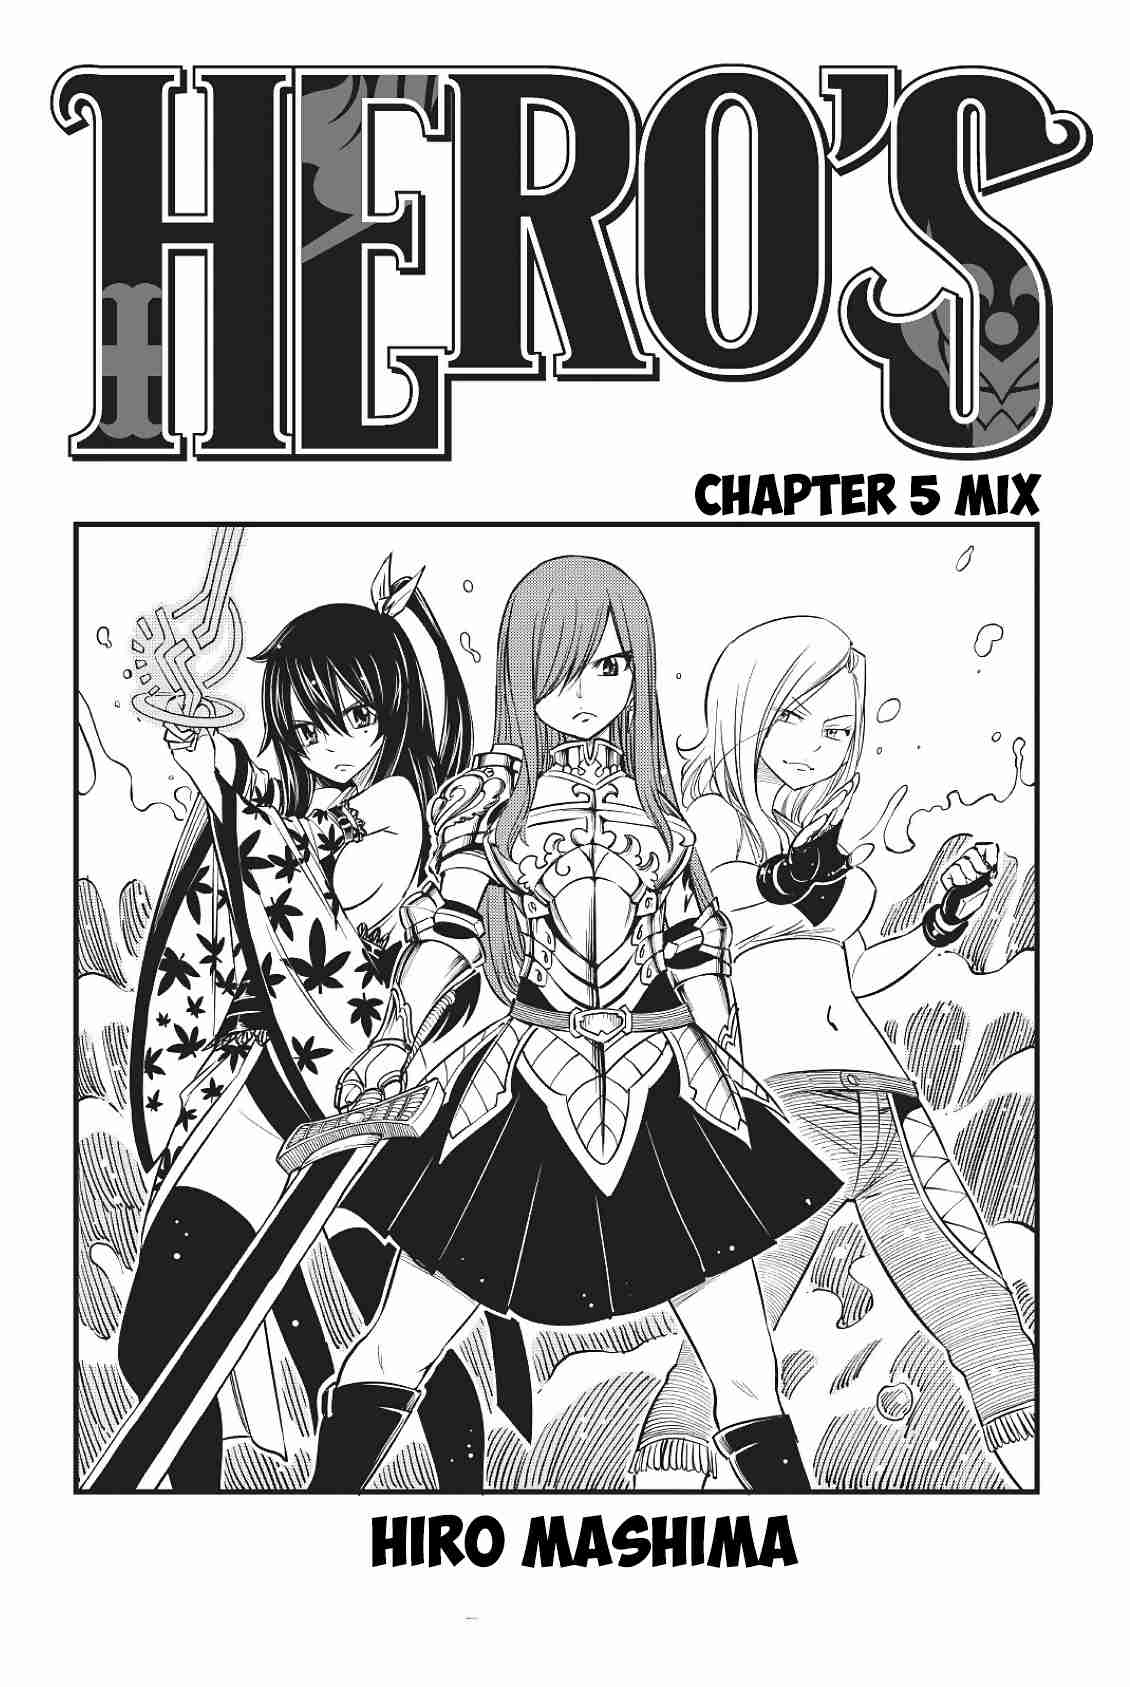 Hero's Ch. 5 Mix